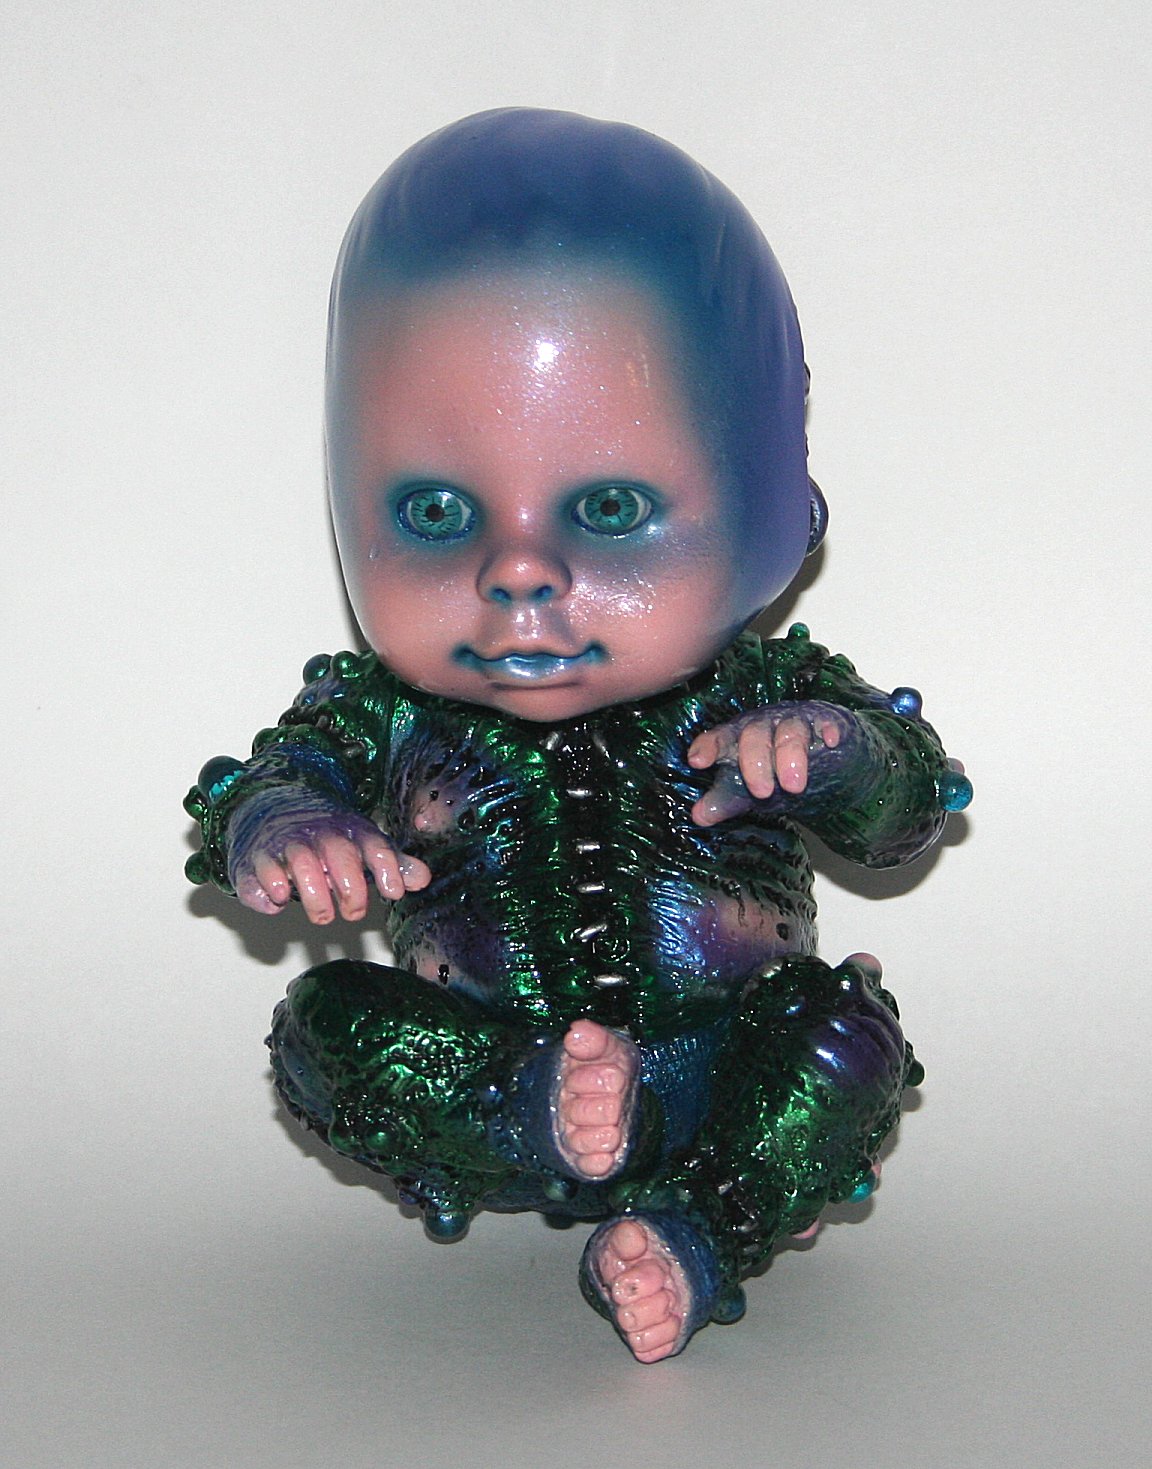 Topheroy x Miscreation Toys Autopsy Zombie Staple Baby Custom